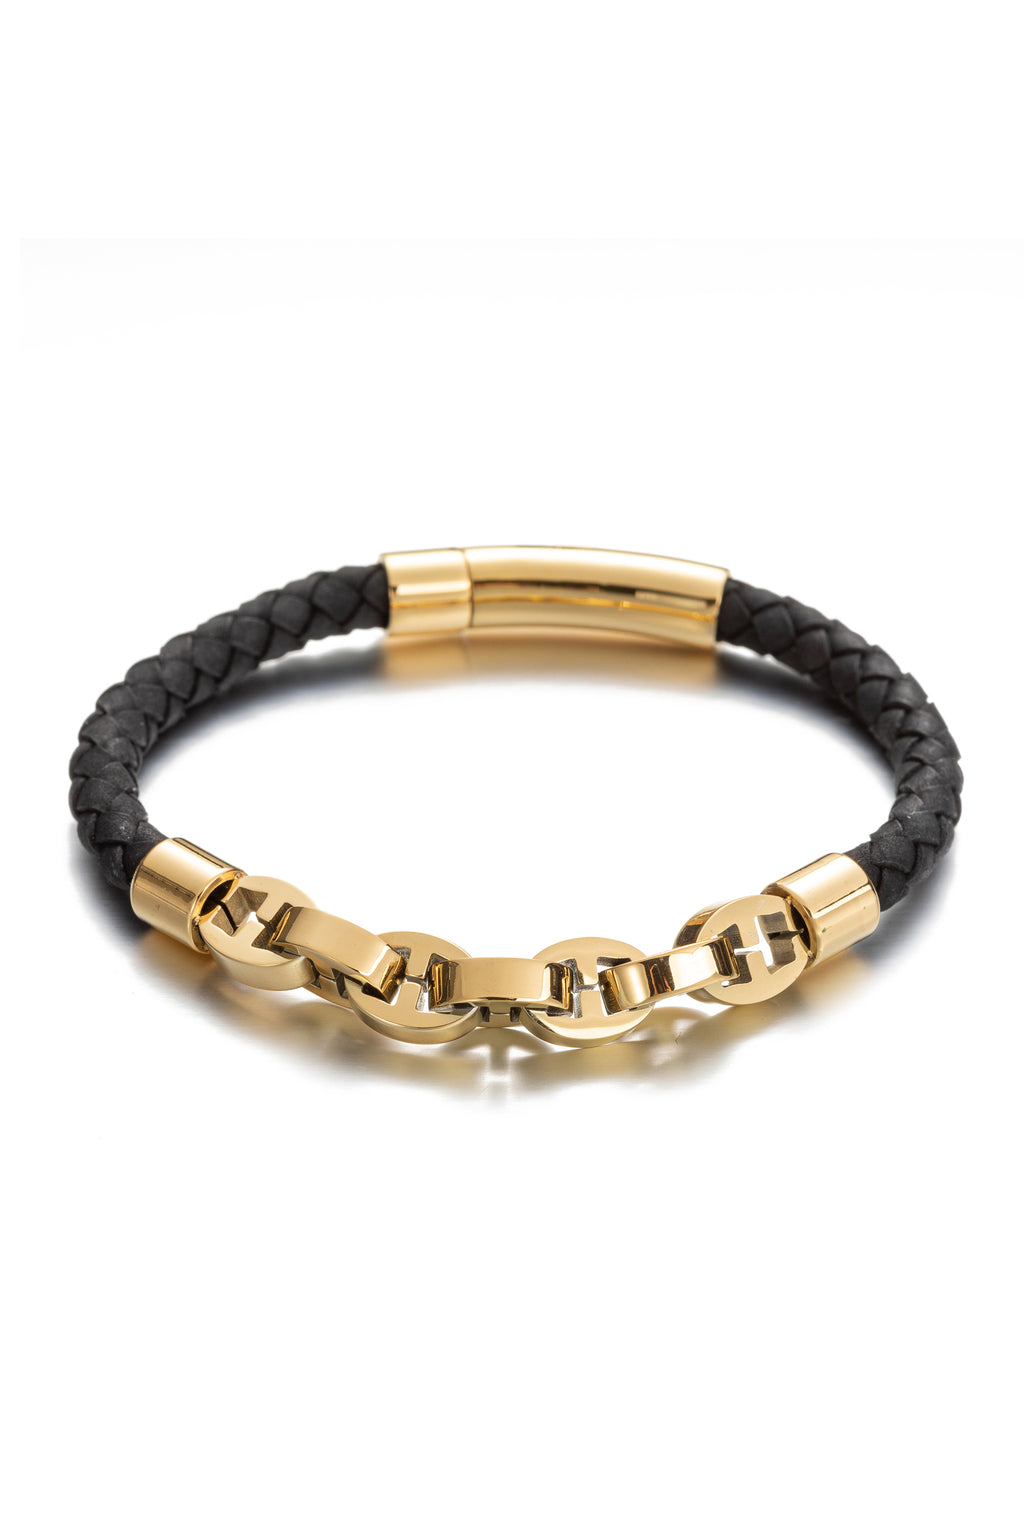 18k gold plated titanium leather braided bracelet.